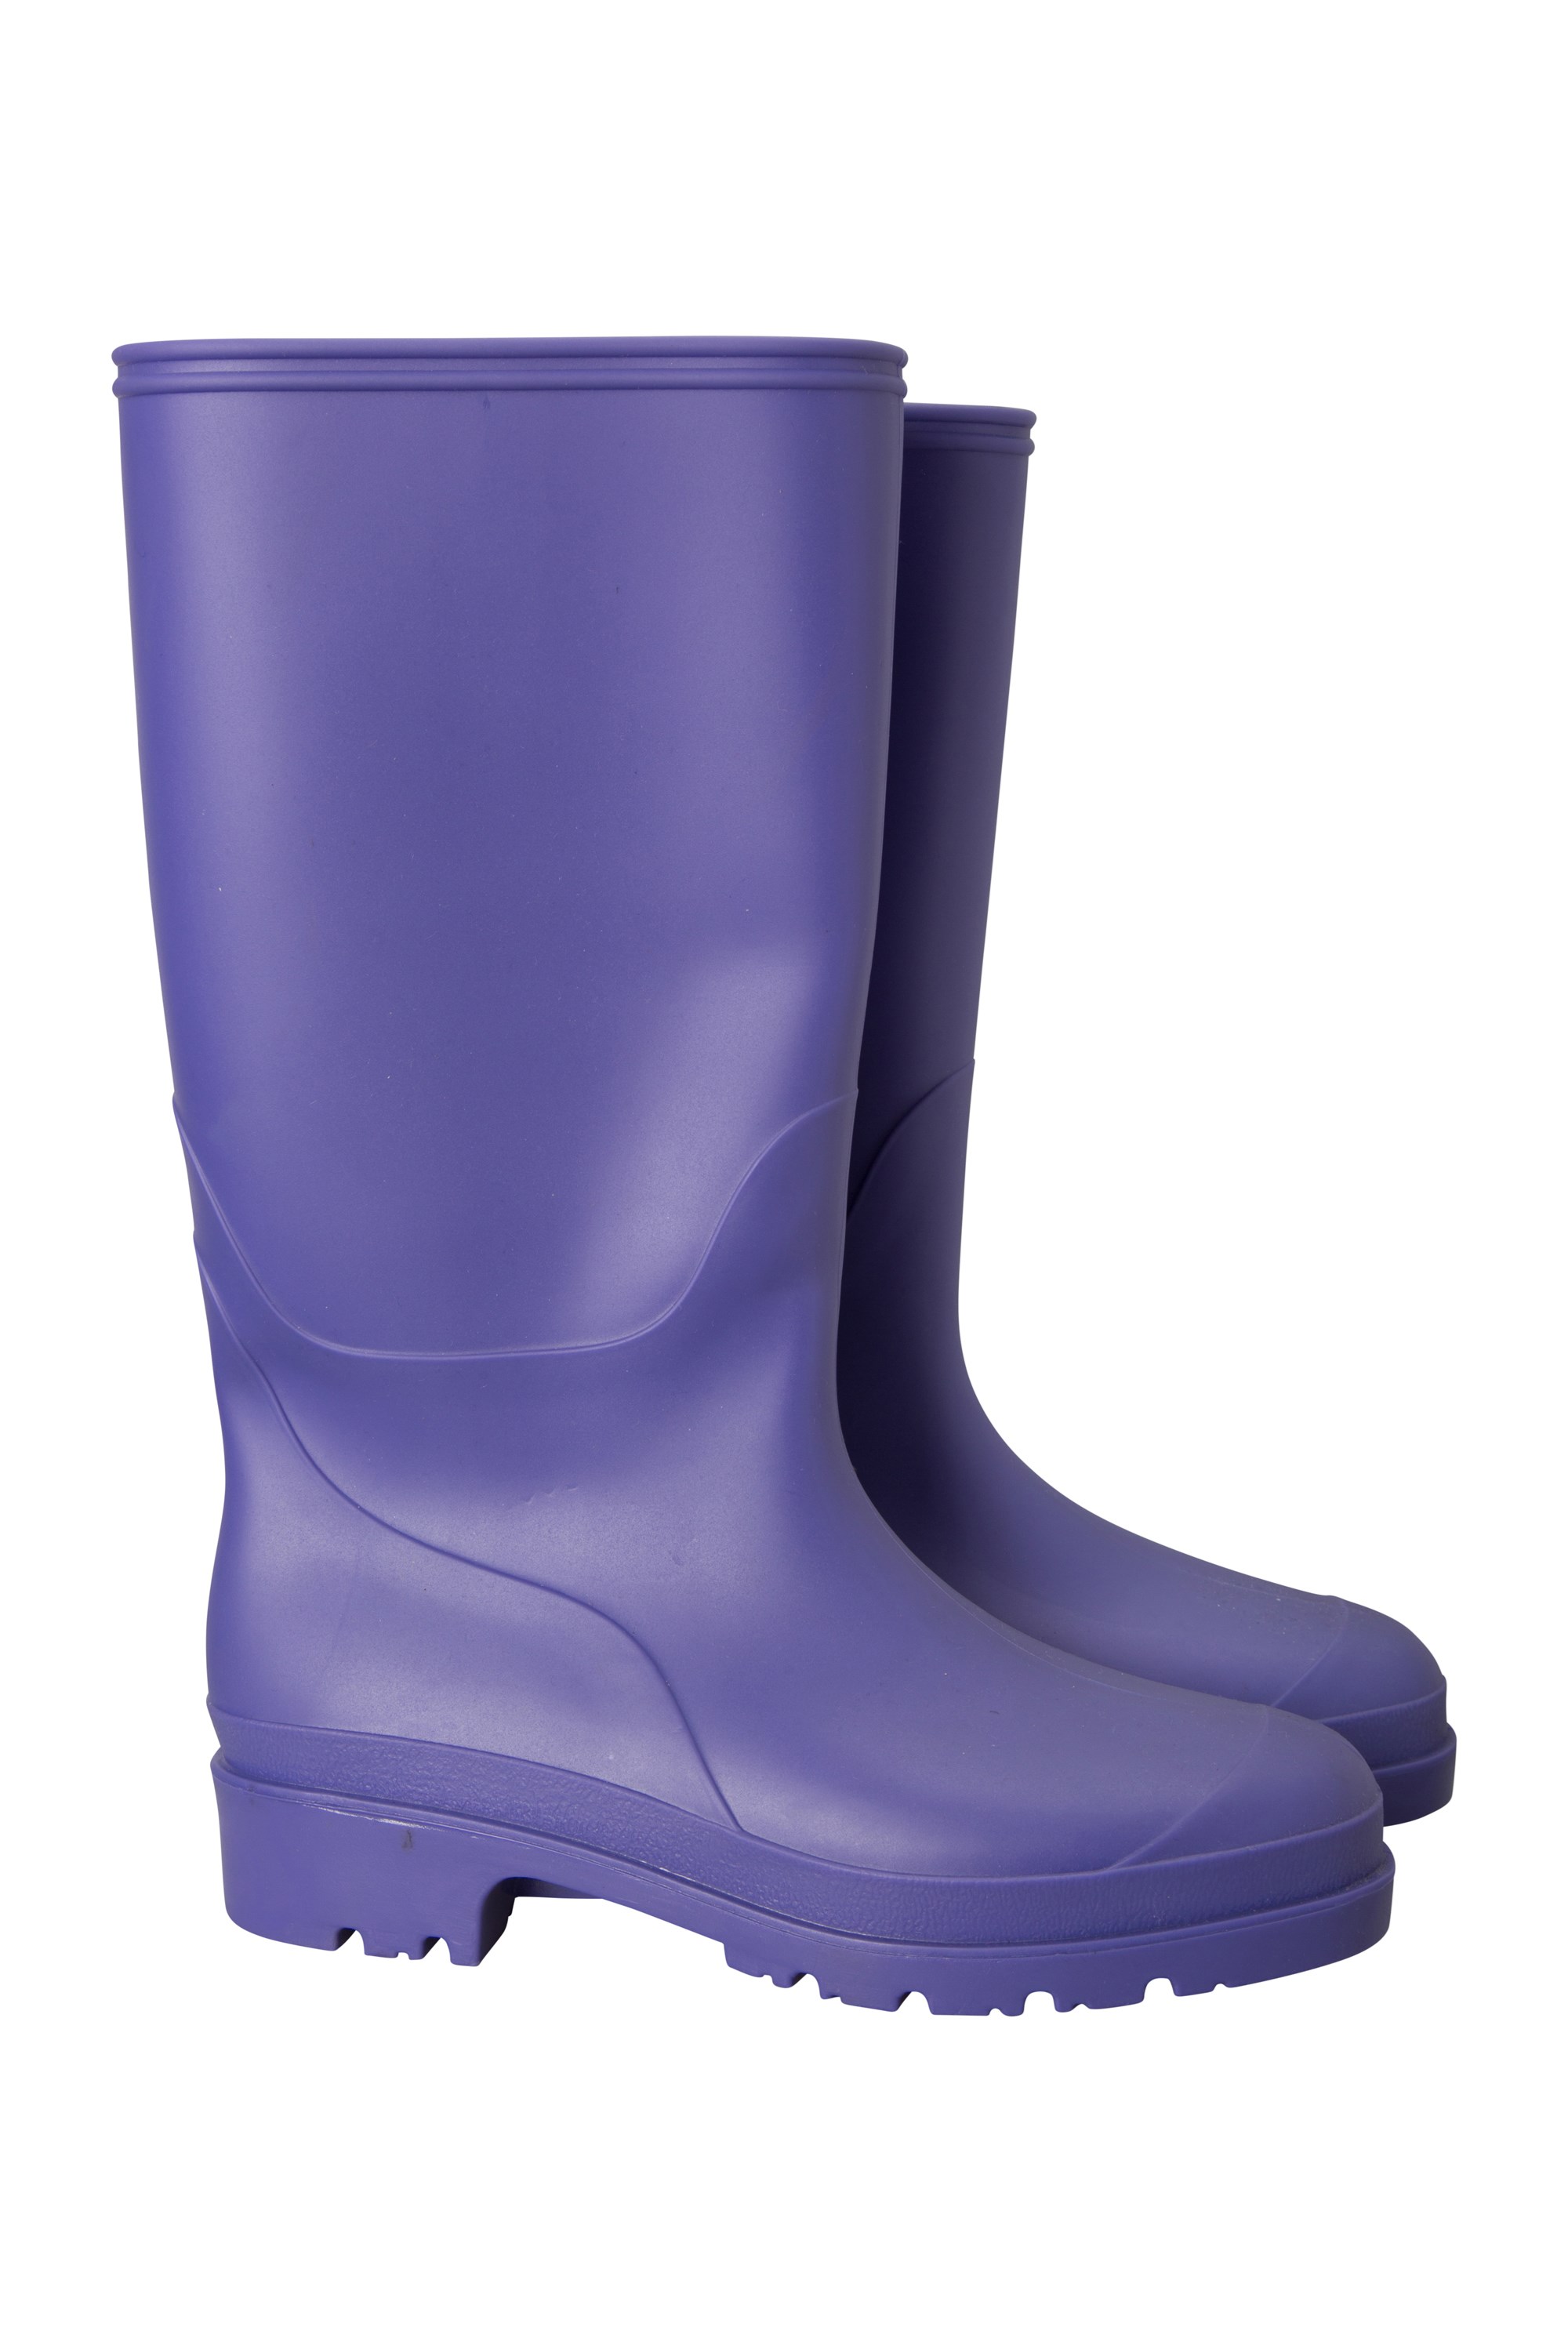 Mountain Warehouse Muddle Kids Rain Boots Purple